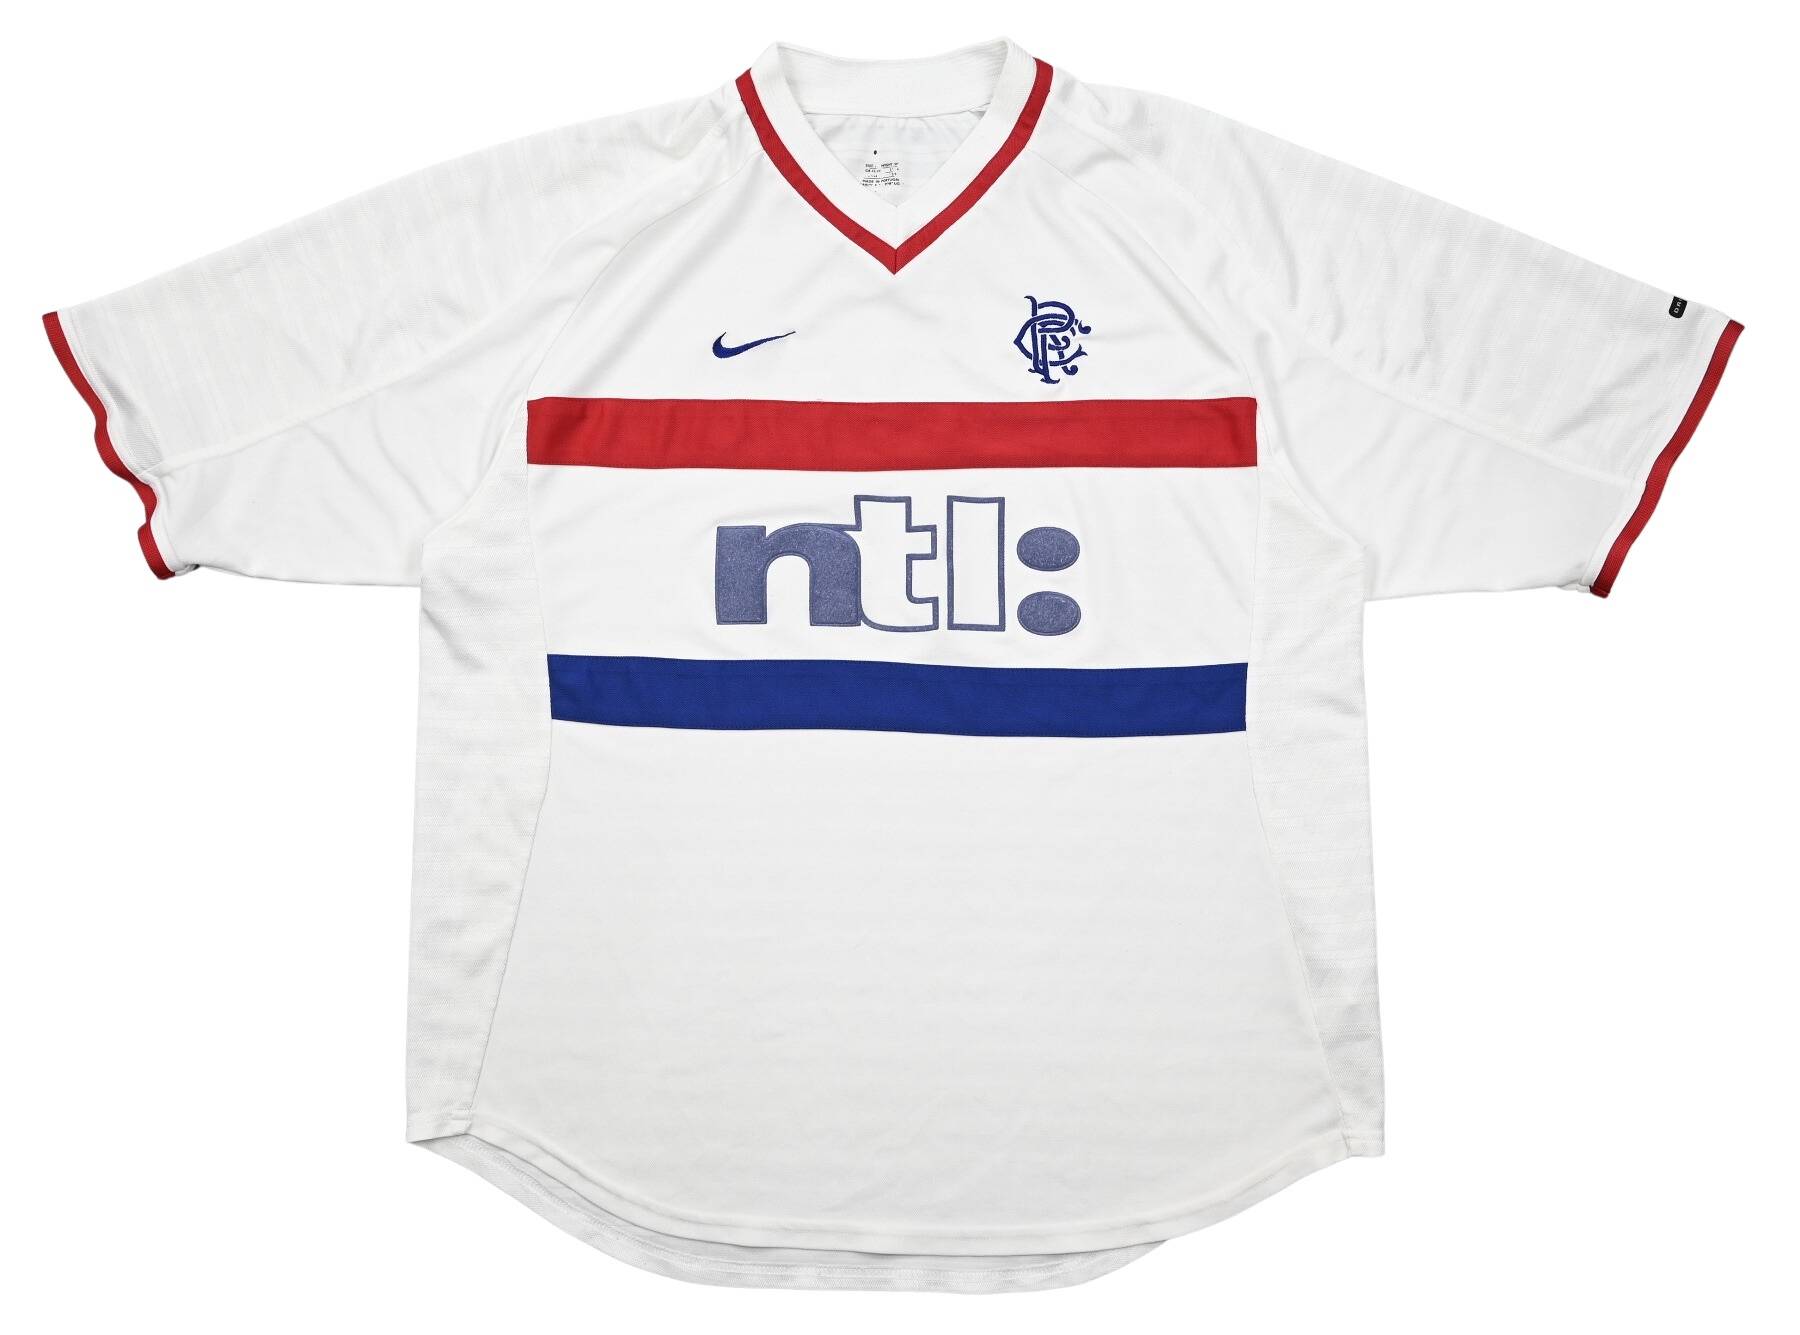 2000/01 Rangers Away Football Shirt / Old Nike Glasgow Soccer